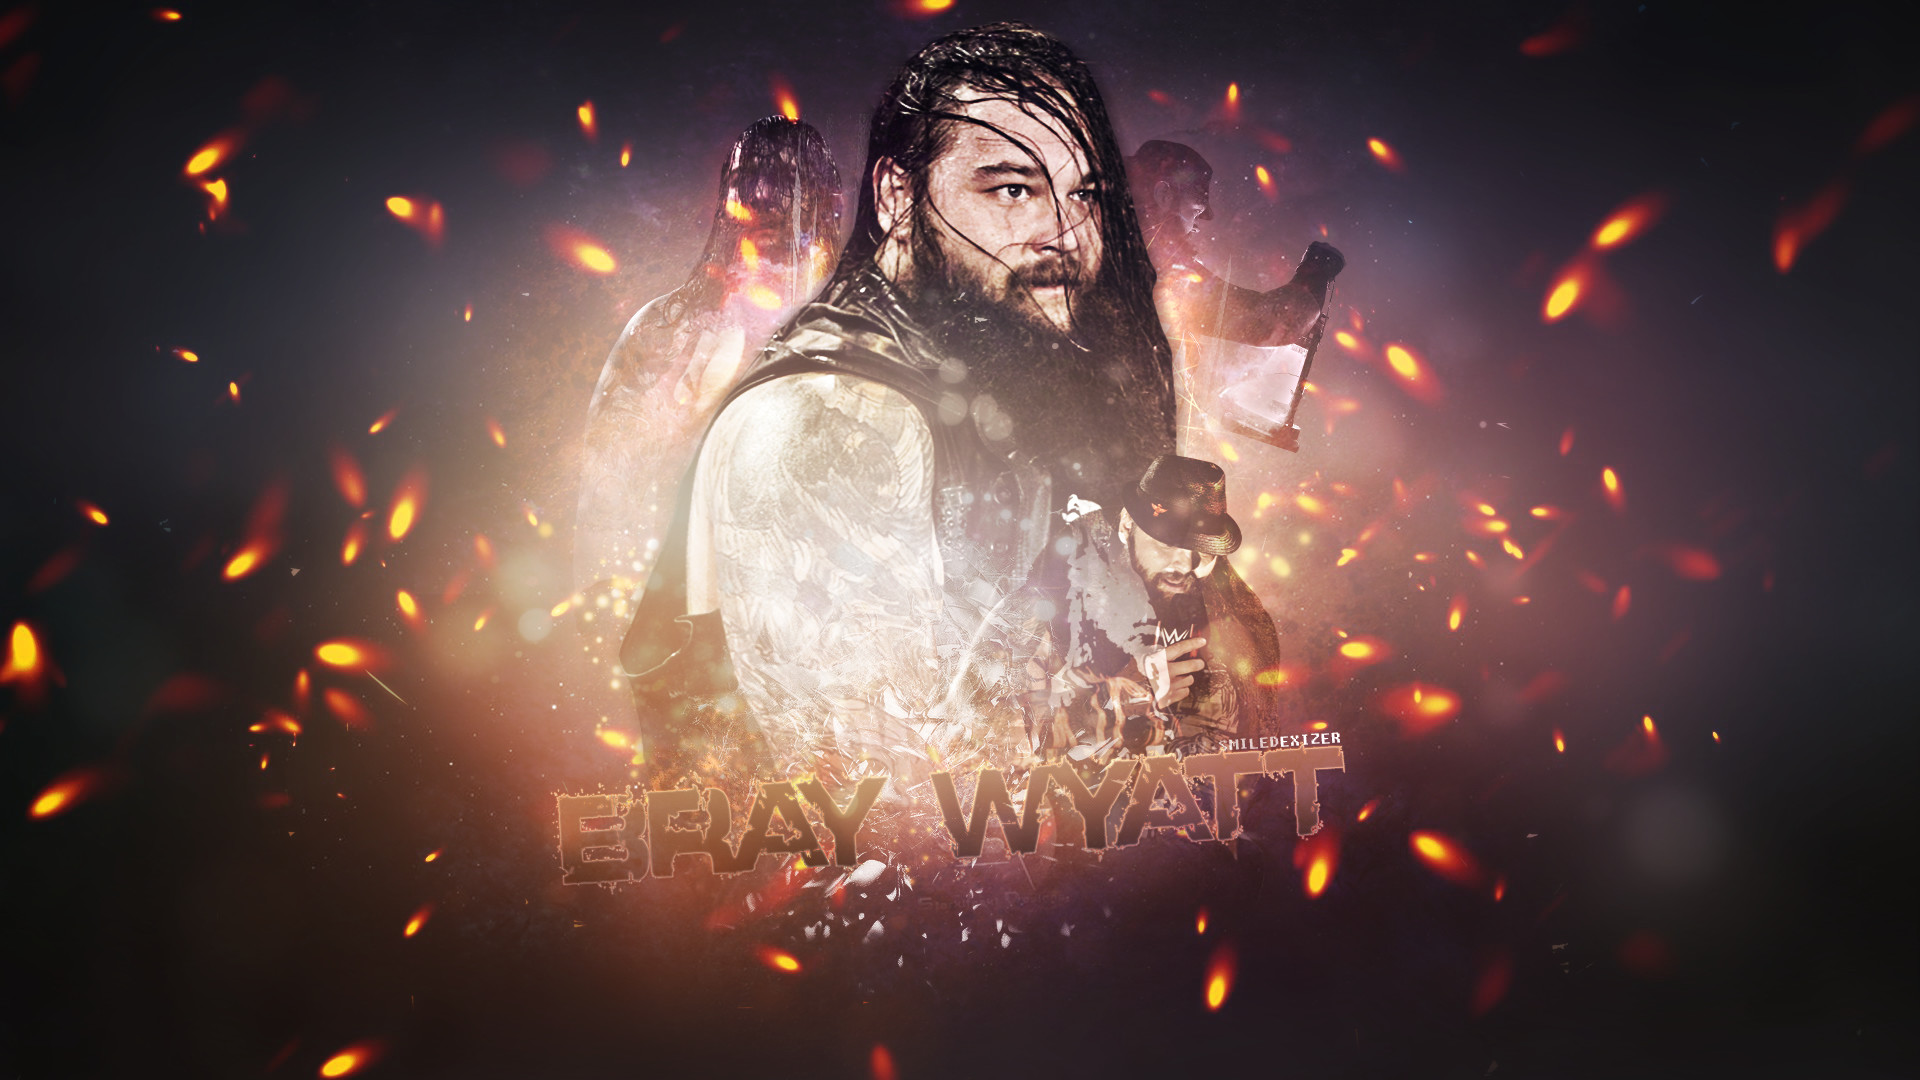 1920x1080 ... New WWE Wrestling Bray Wyatt 2015 Wallpaper by SmileDexizeR